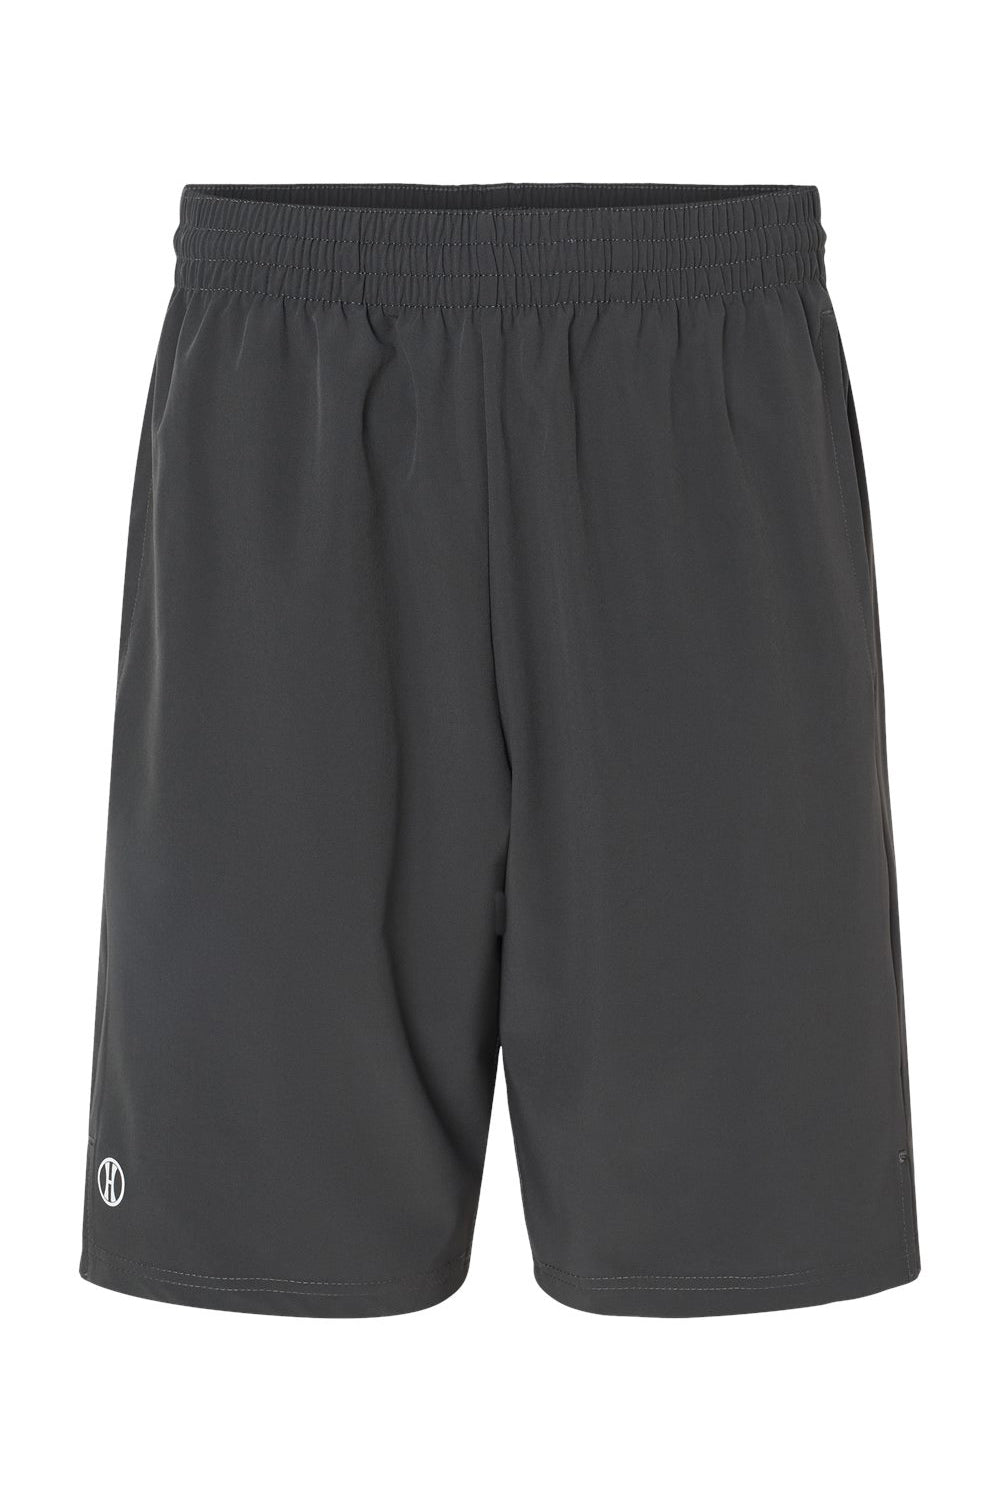 Holloway 229556 Mens Weld Shorts w/ Pockets Carbon Grey Flat Front